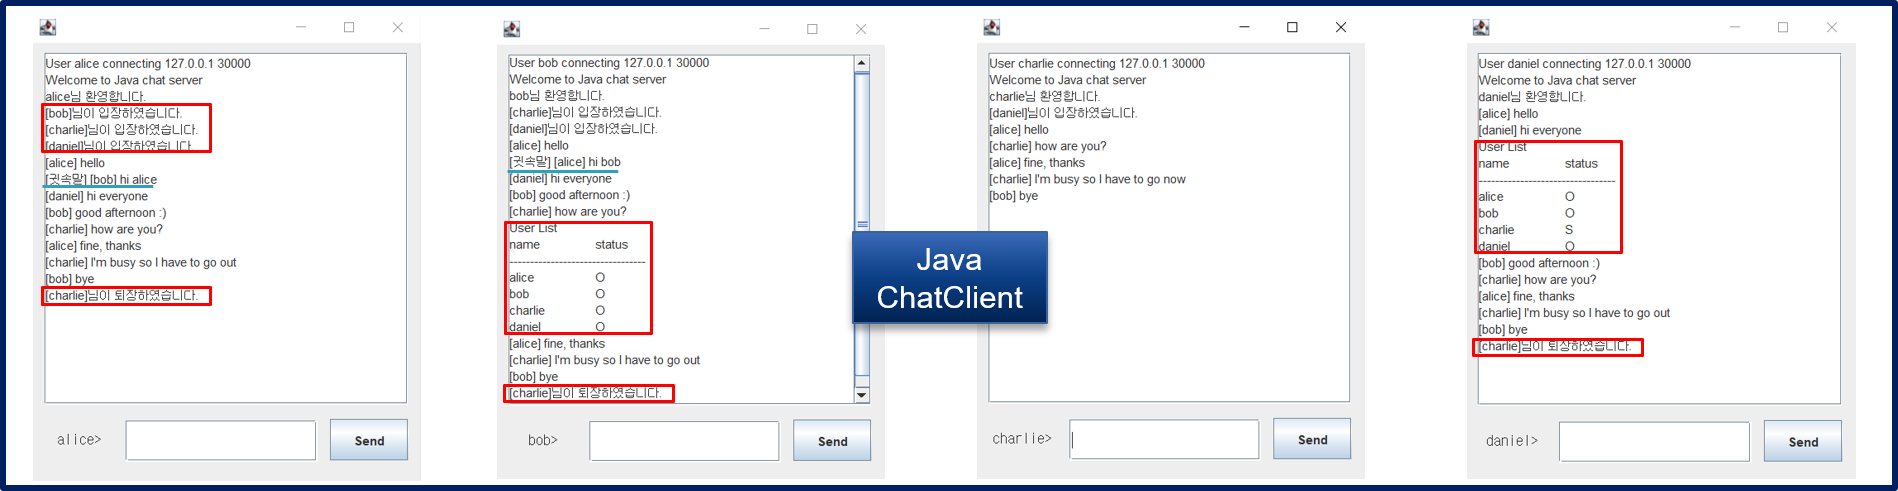 java-chat-client.png